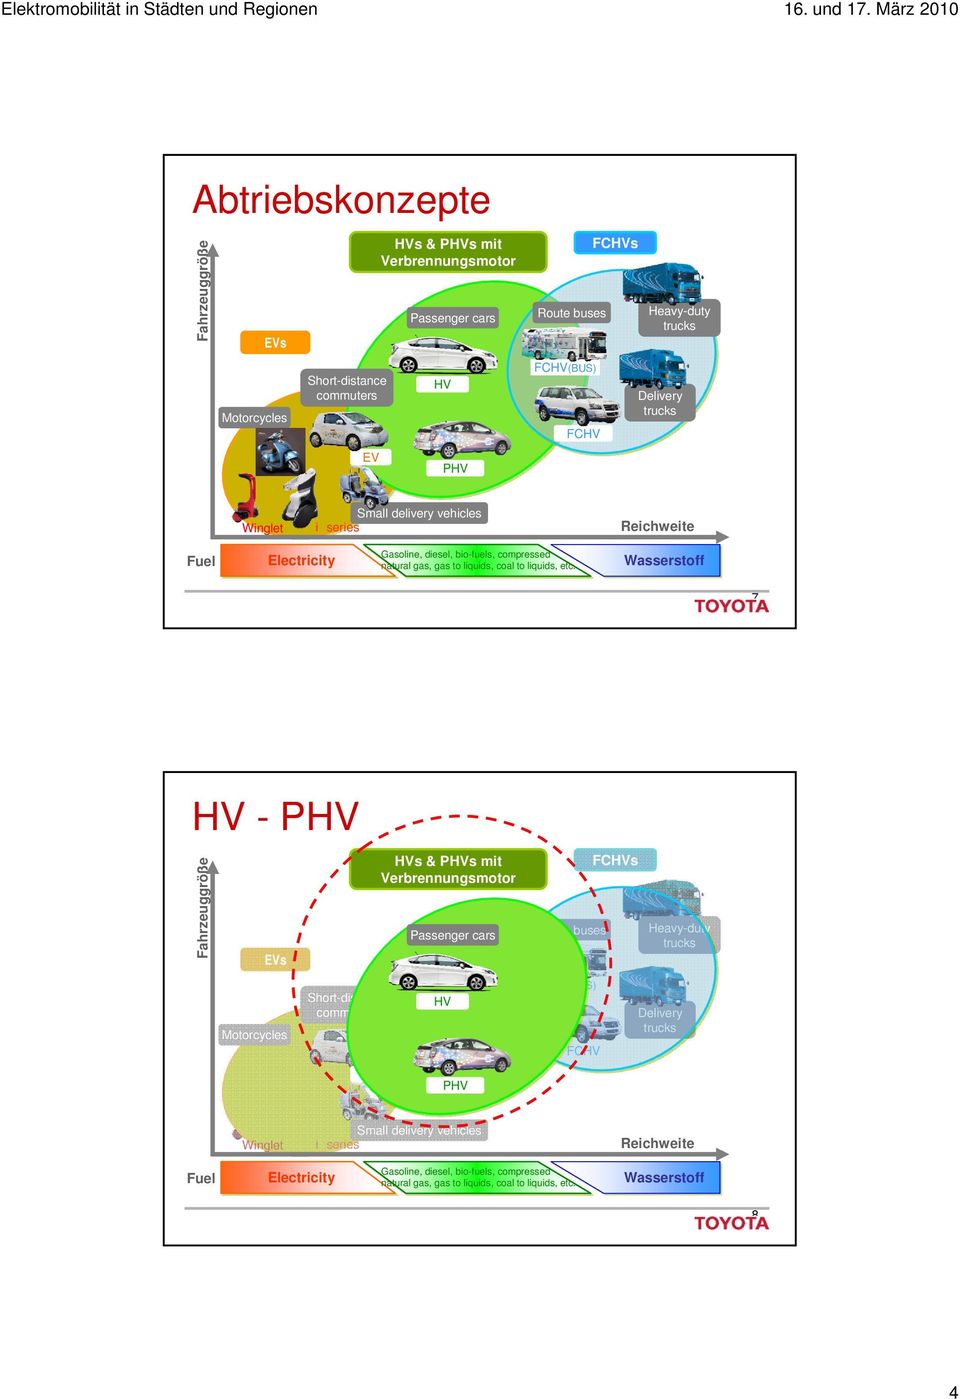 Wasserstoff 7 HV - PHV Fahrzeuggröße EVs HVs & PHVs mit Verbrennungsmotor Passenger cars Route buses FCHVs Heavy-duty trucks Motorcycles Short-distance commuters HV FCHV(BUS) FCHV